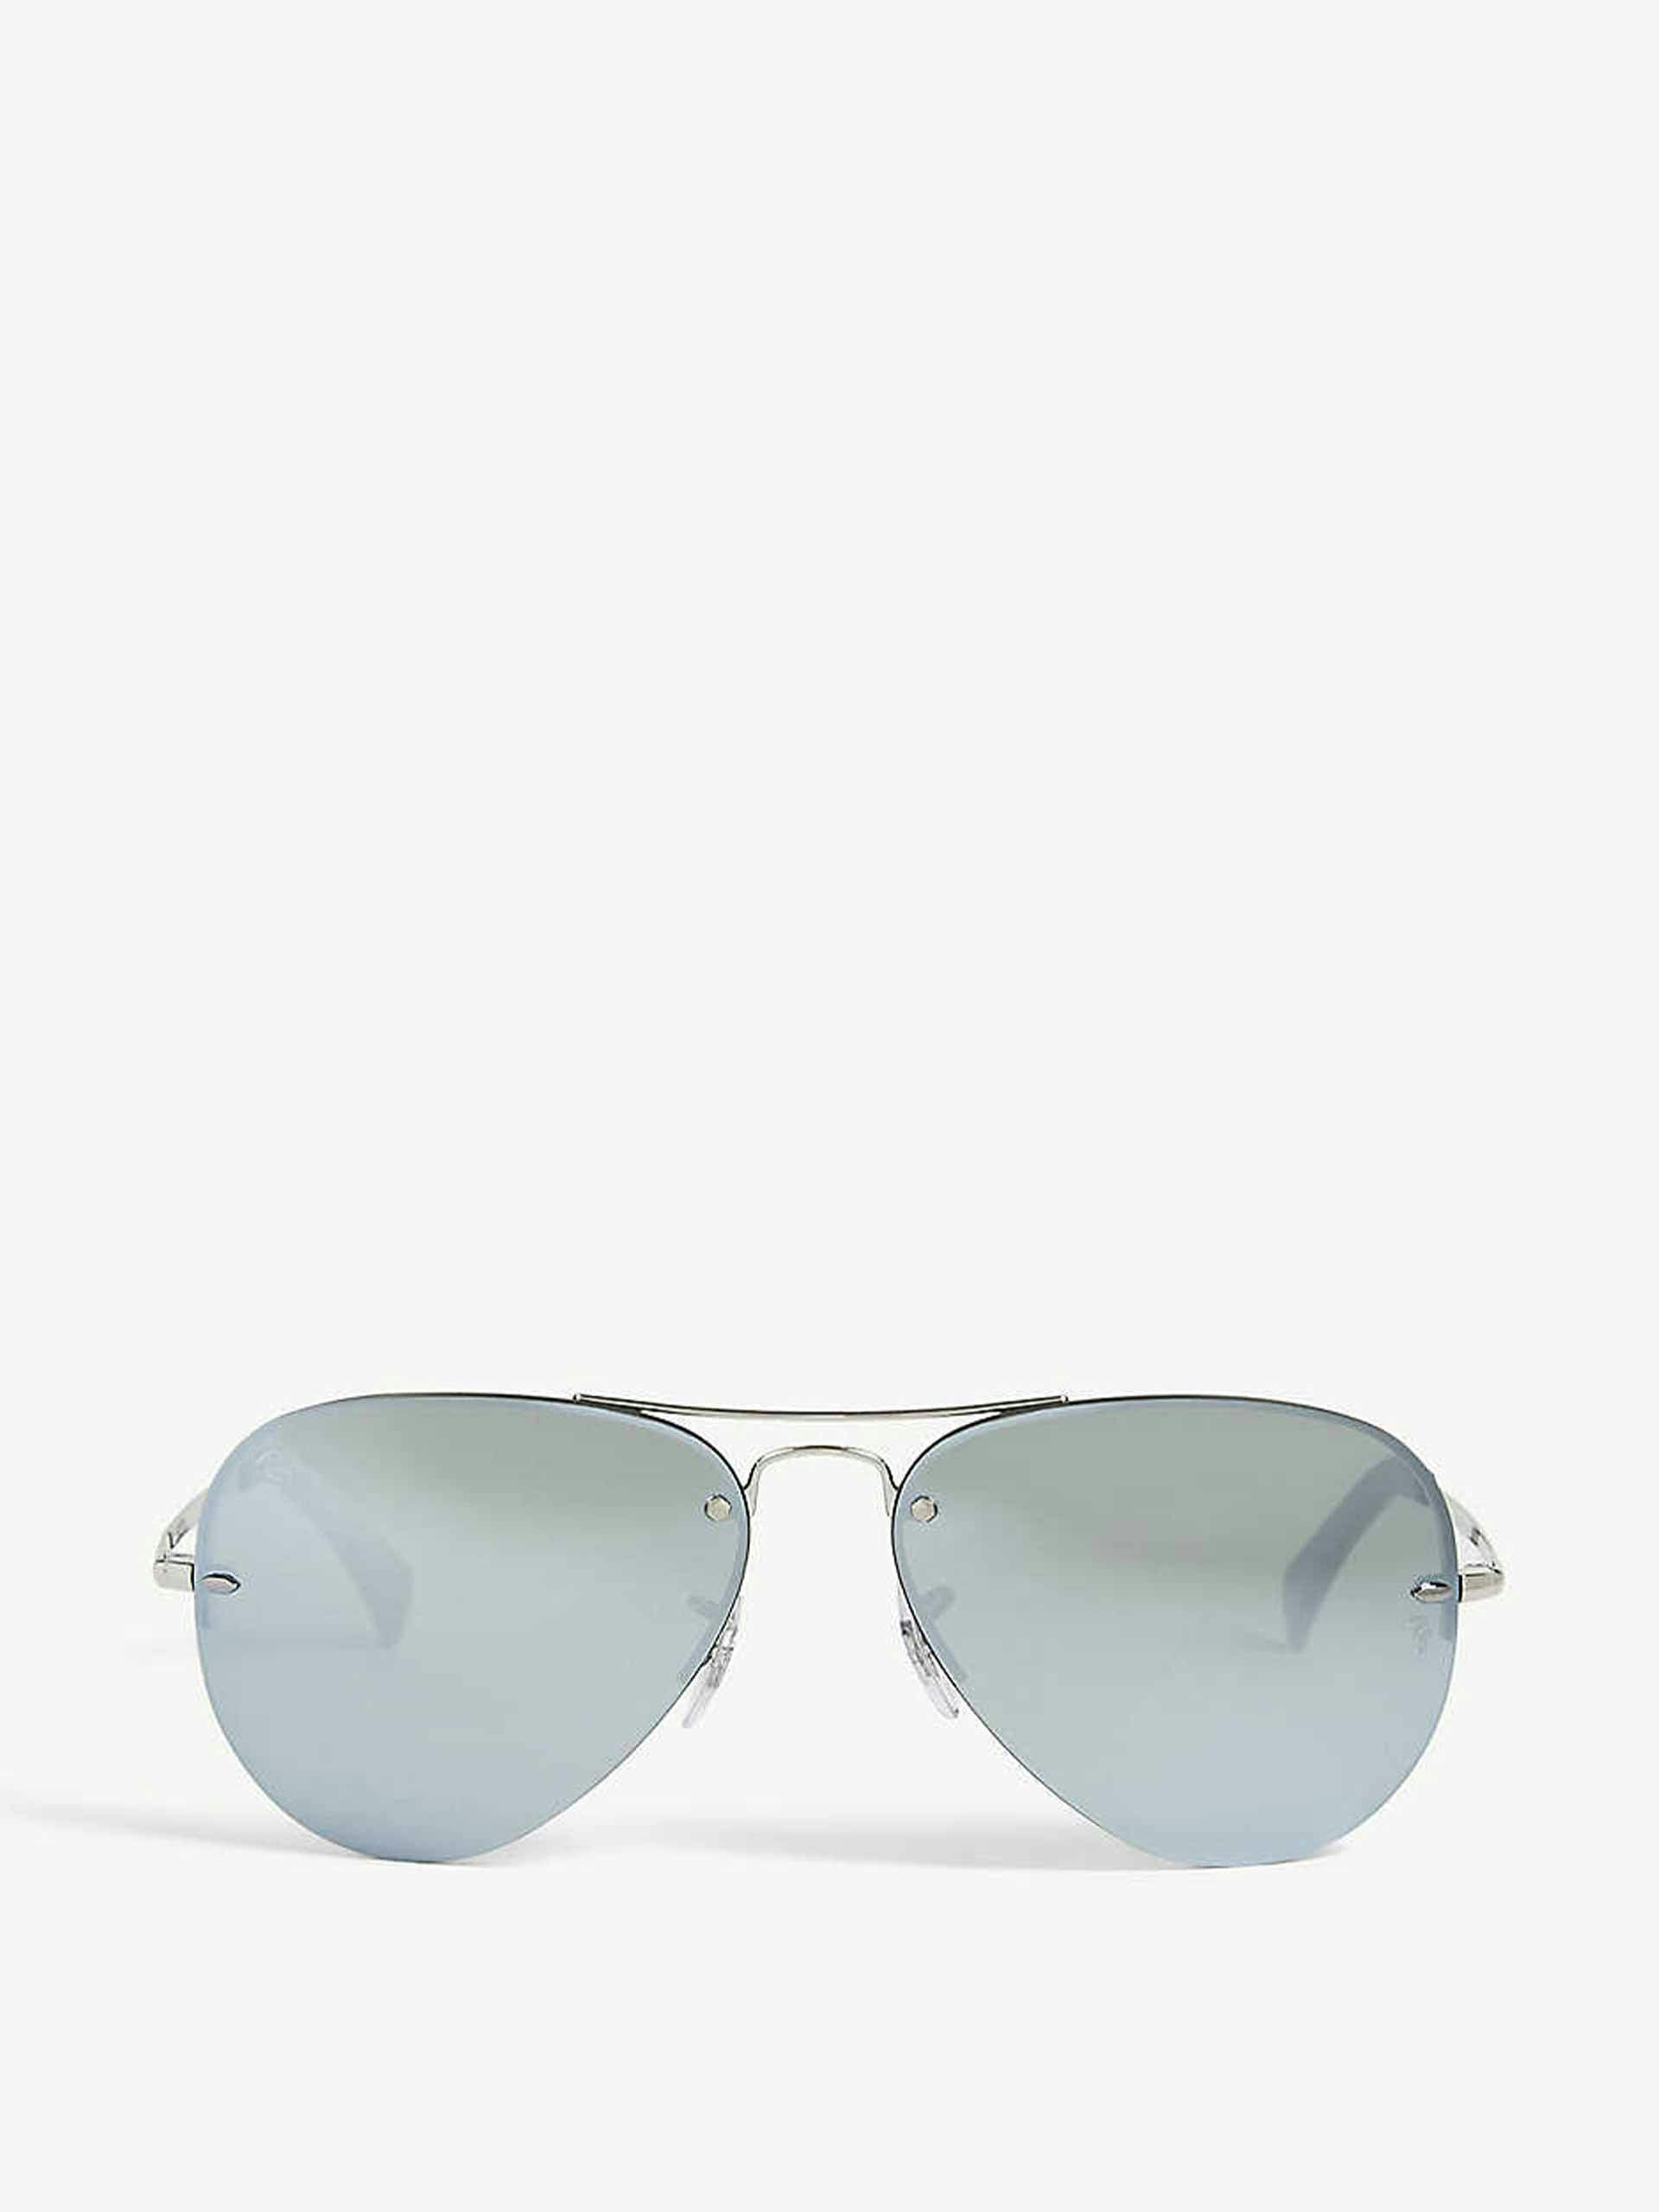 RB3449 silver-toned aviator sunglasses